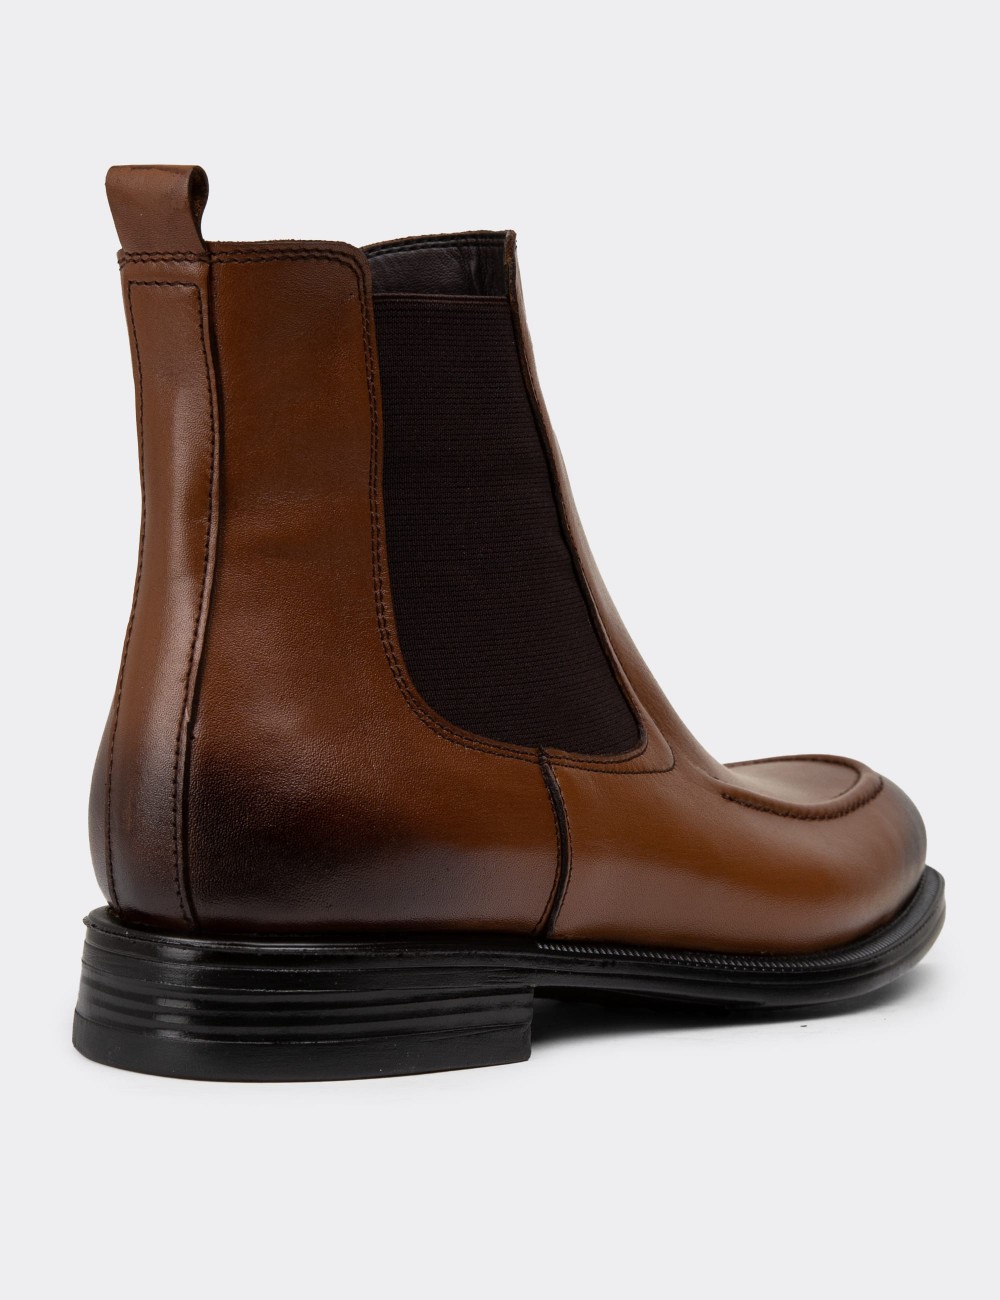 Tan Leather Chelsea Boots - 01953MTBAC01